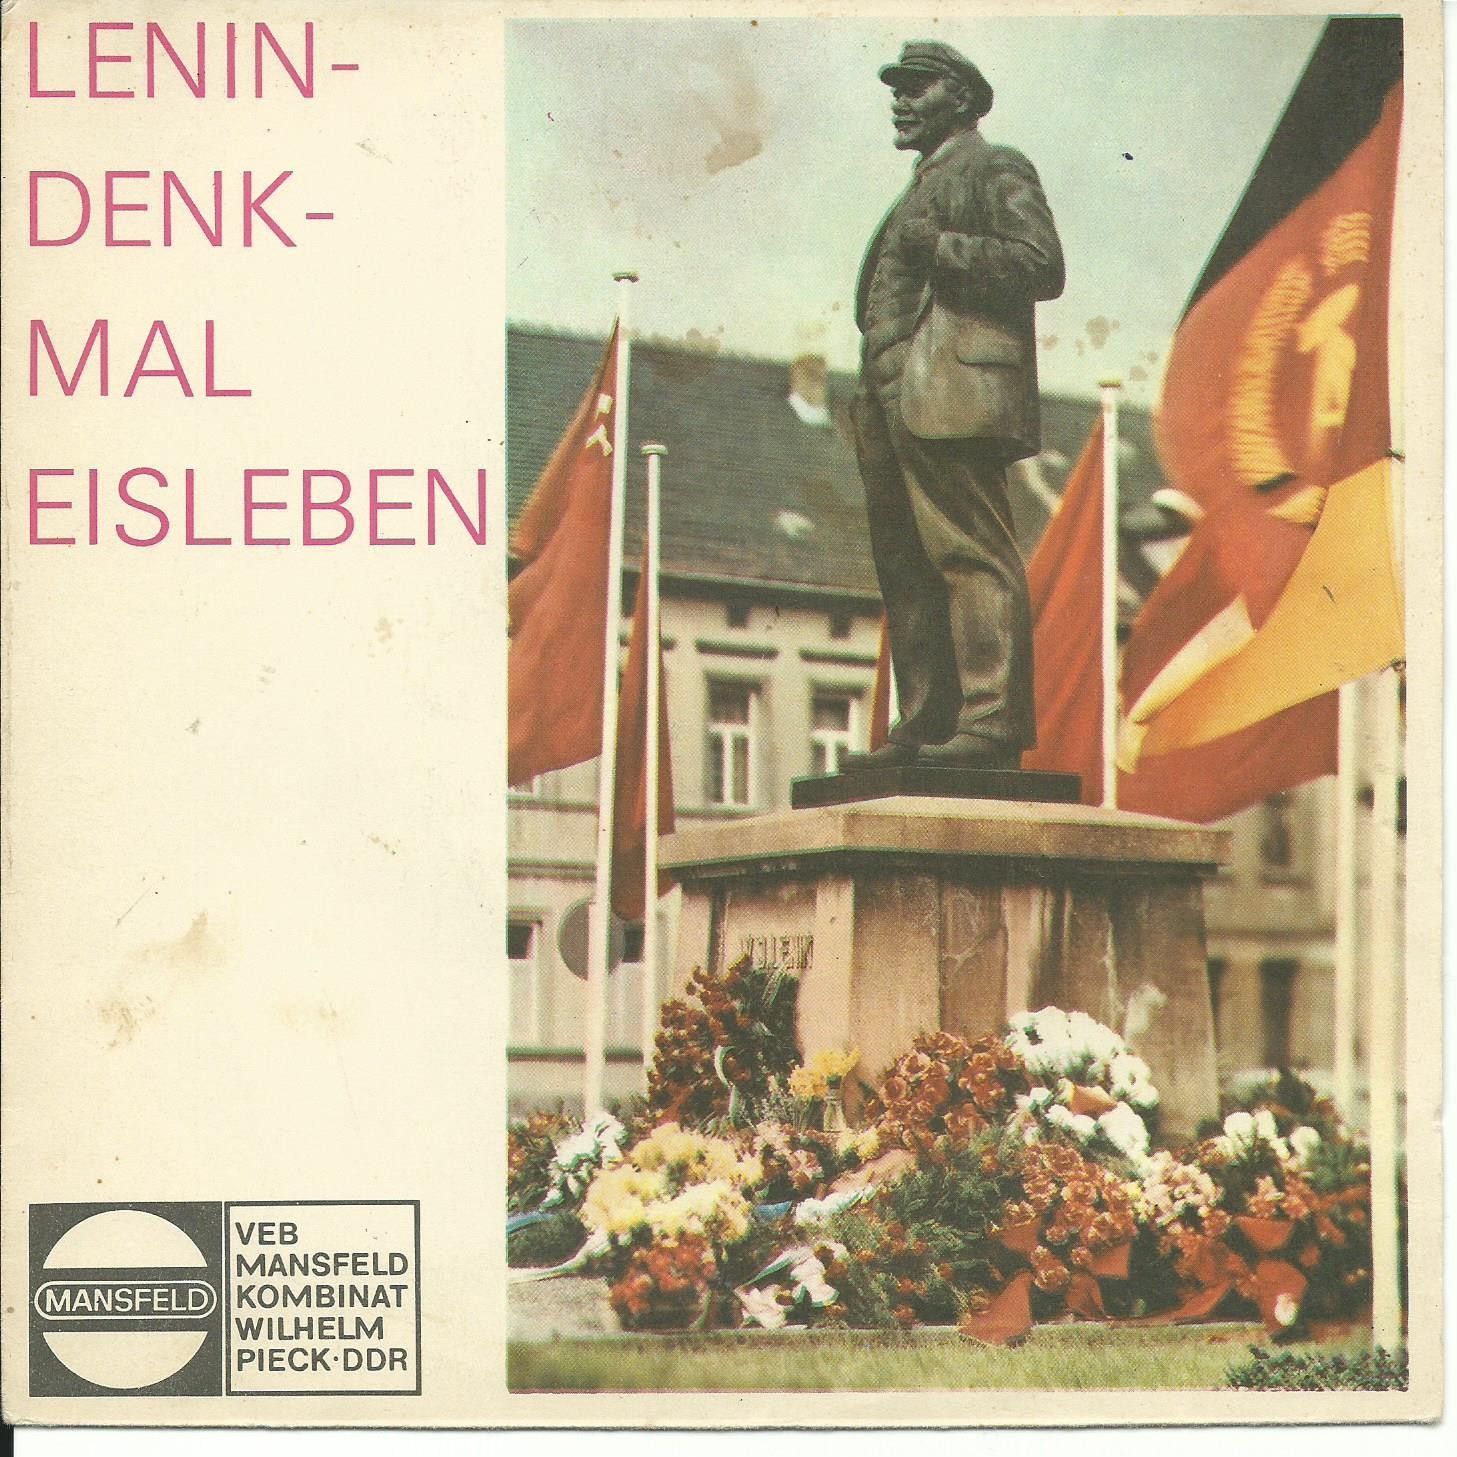 Lenindenkmal Eisleben (на немецком языке)